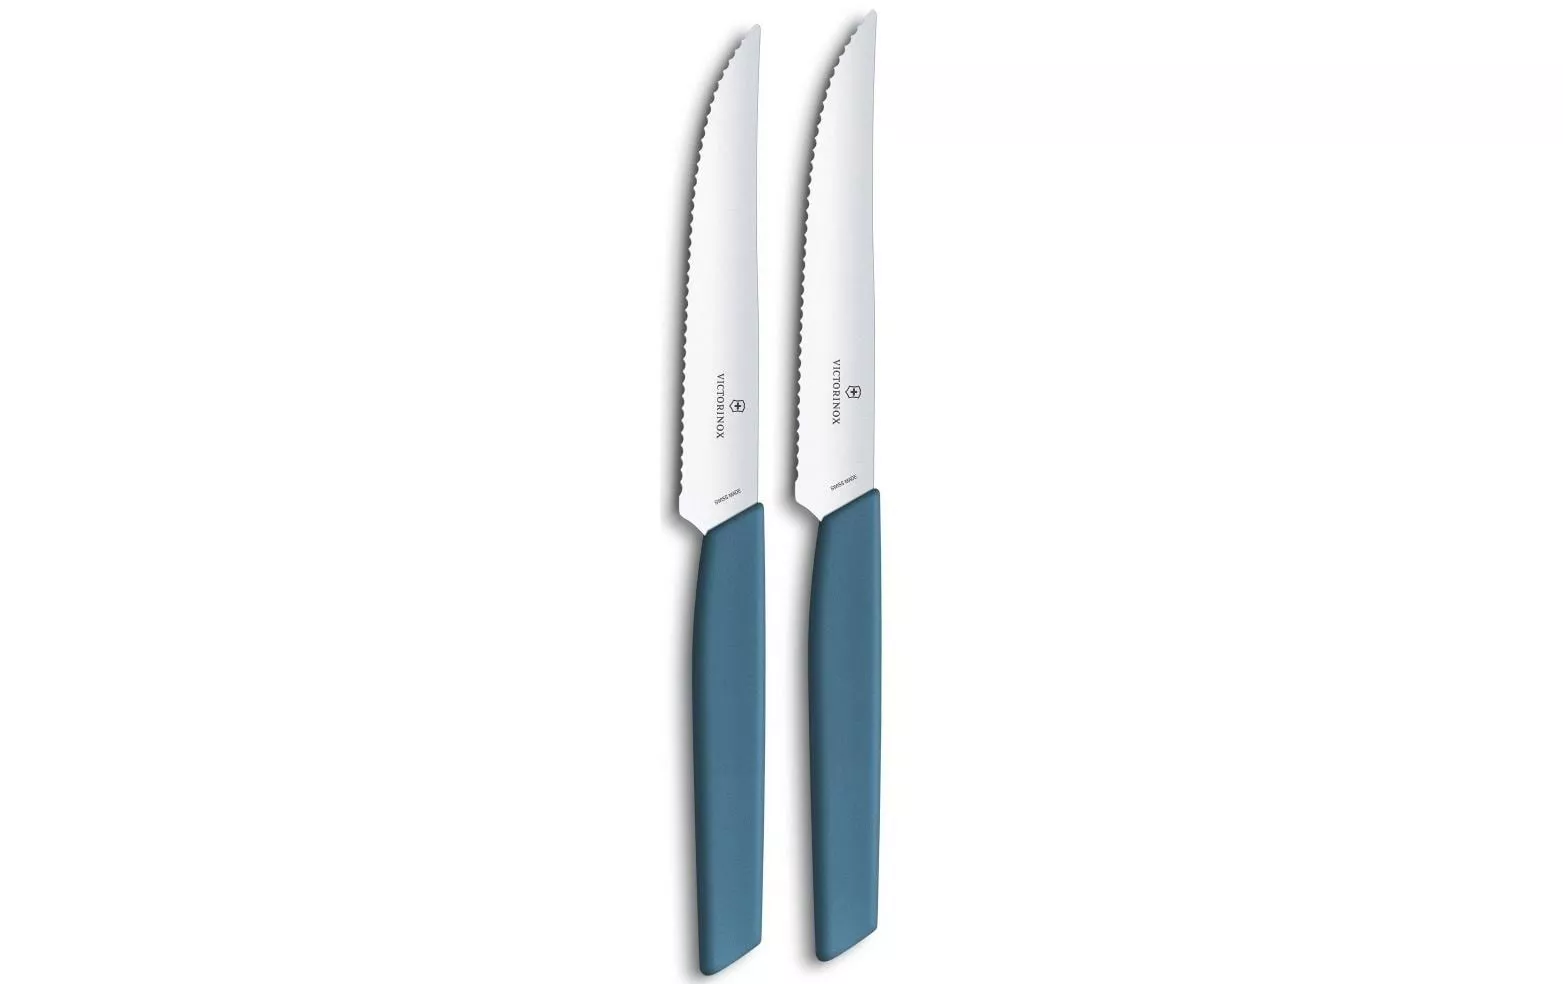 Steakmesser-Set Swiss Modern 2 Stück, Blau